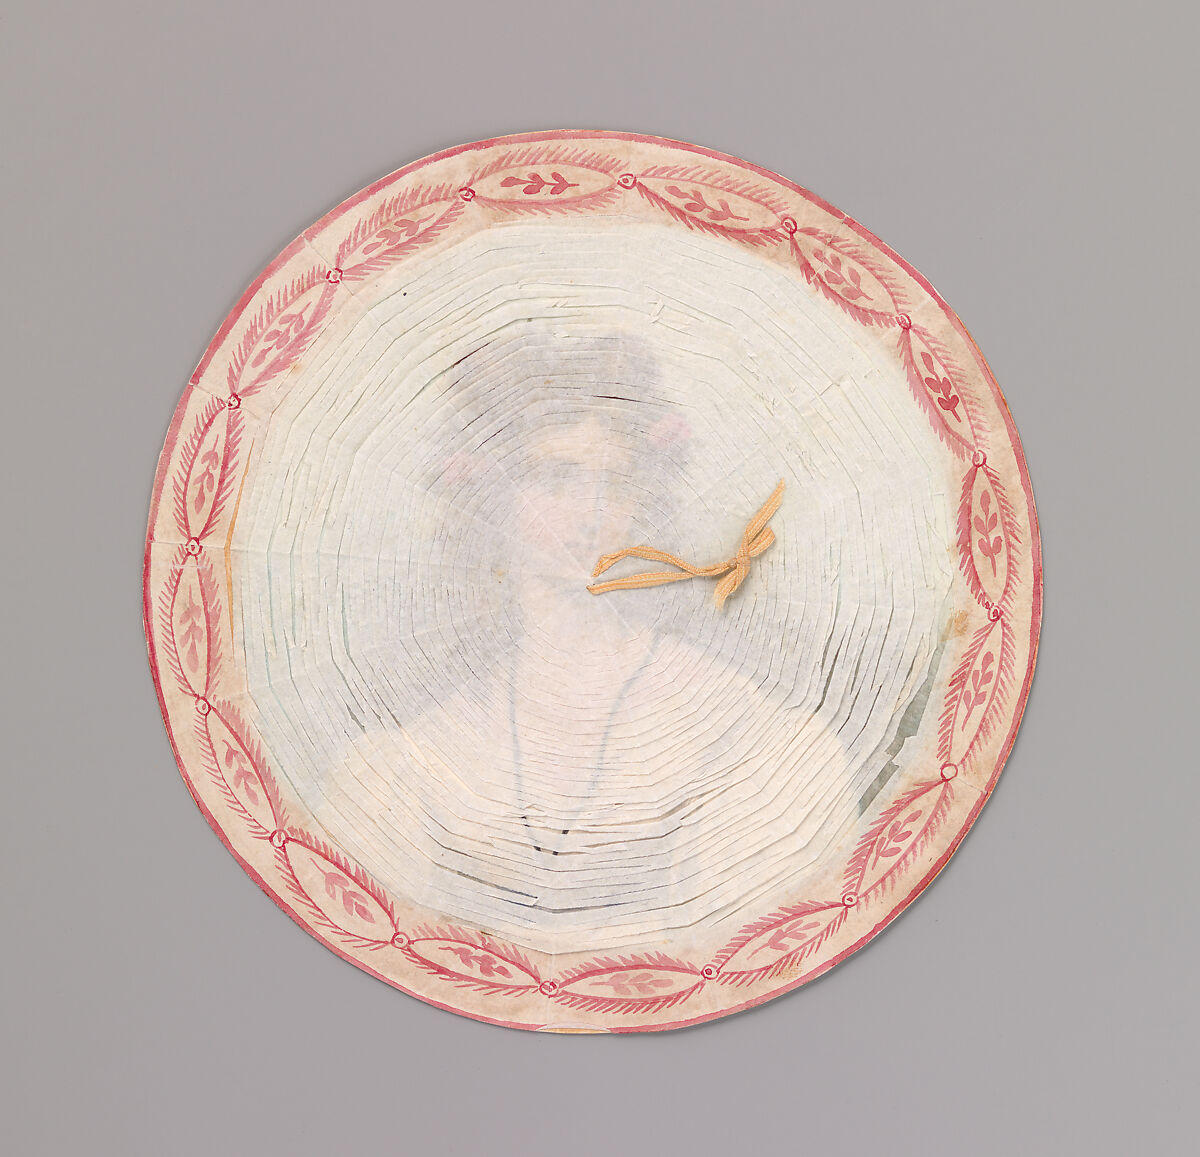 Cobweb Valentine, Anonymous  , American or British, 19th century, Watercolor, cut tissue on board 